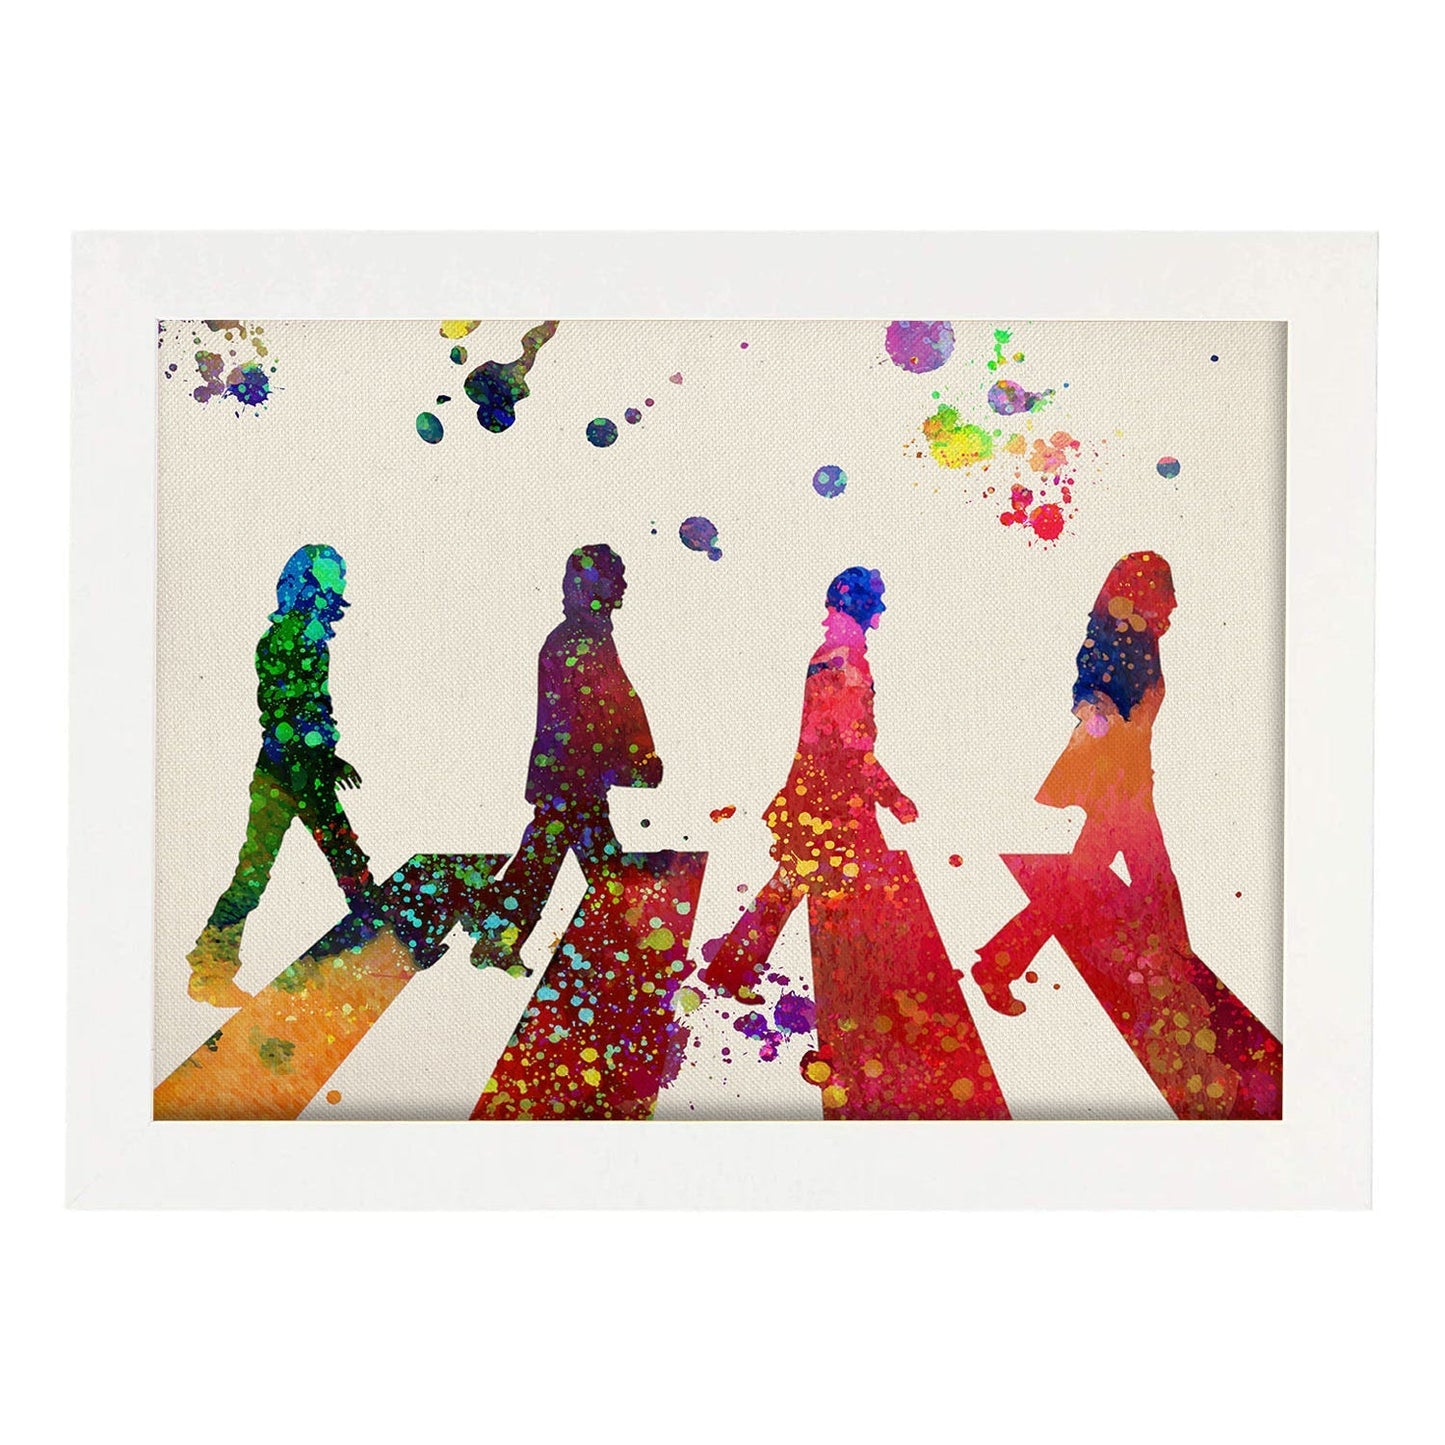 Lámina de la banda de música The Beatles (paso de cebra) en . Poster estilo explosión de color. Lámina de papel 250 gr.-Artwork-Nacnic-A3-Marco Blanco-Nacnic Estudio SL